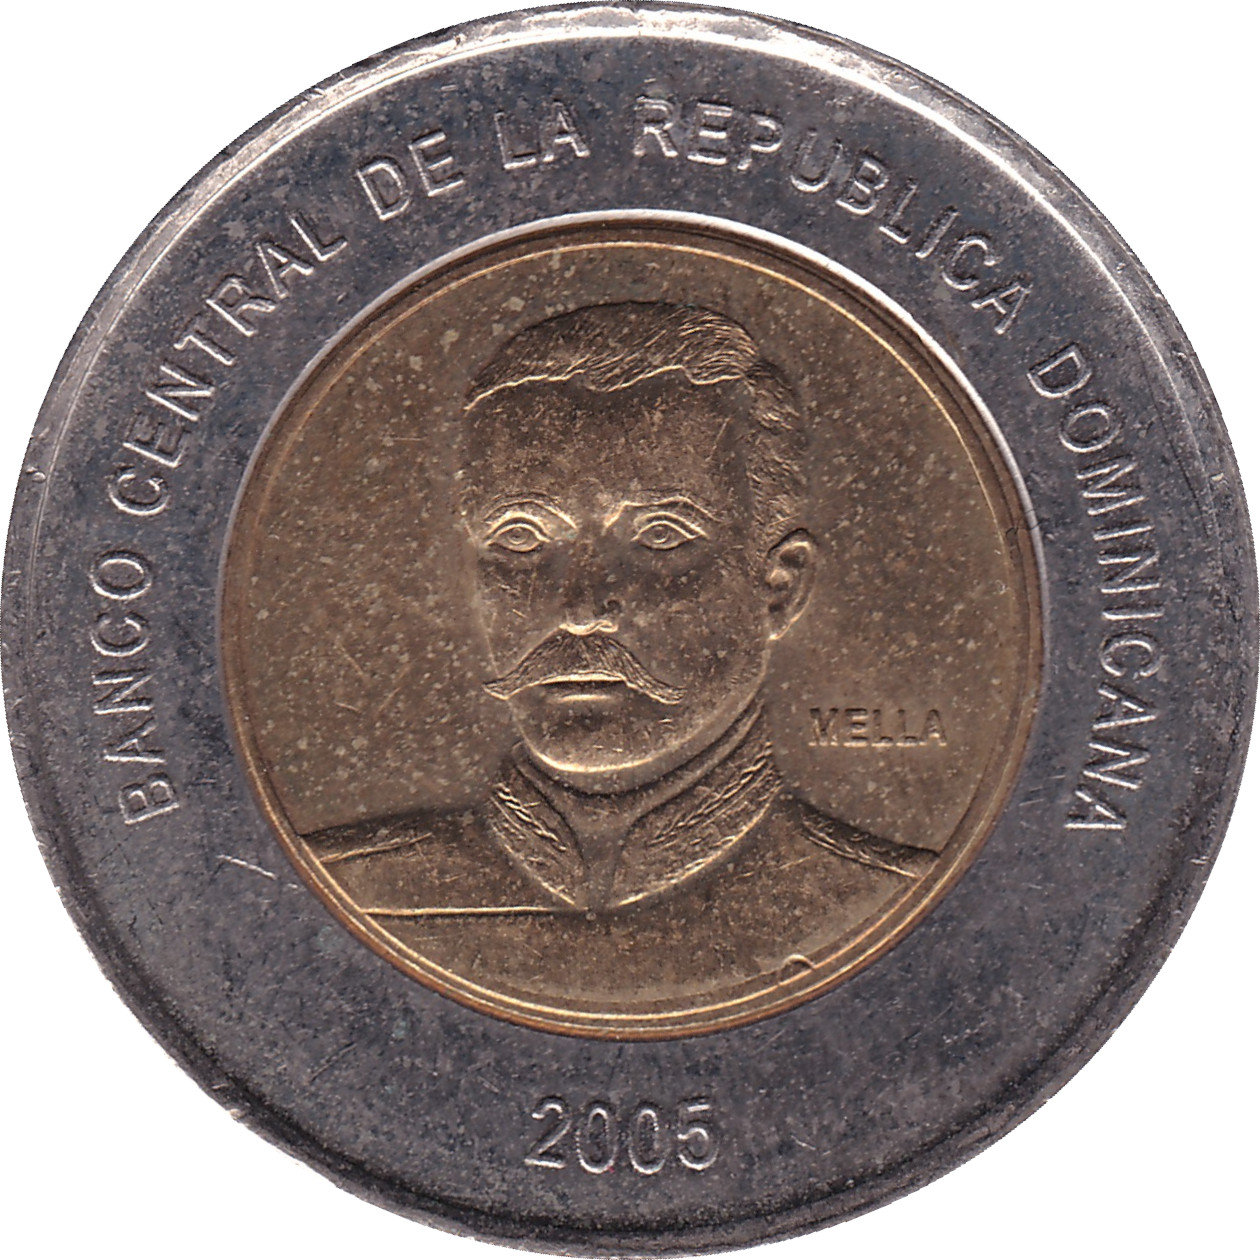 10 pesos - General Mella